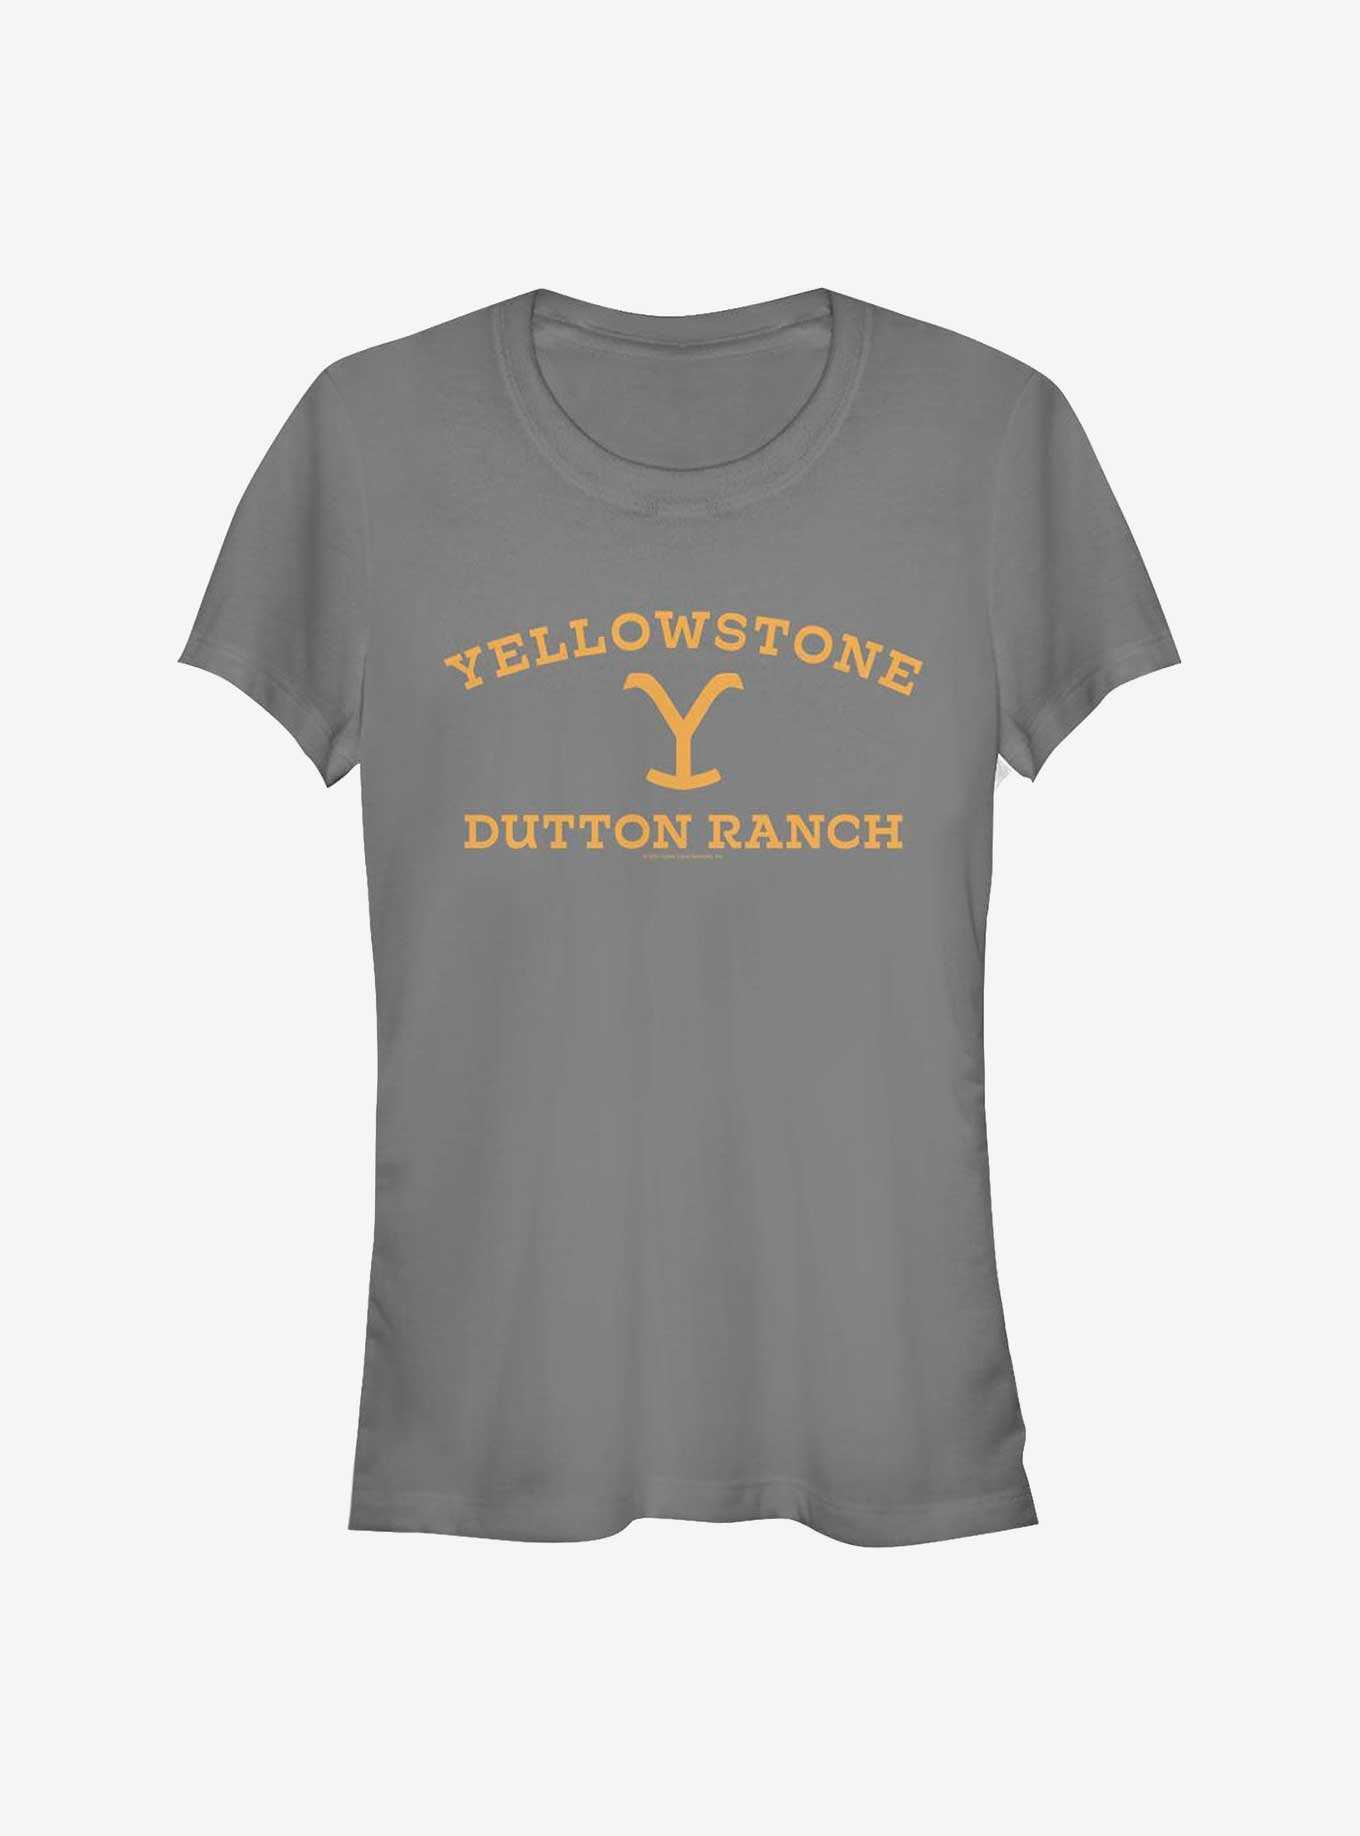 Yellowstone Dutton Ranch Logo Girls T-Shirt, , hi-res